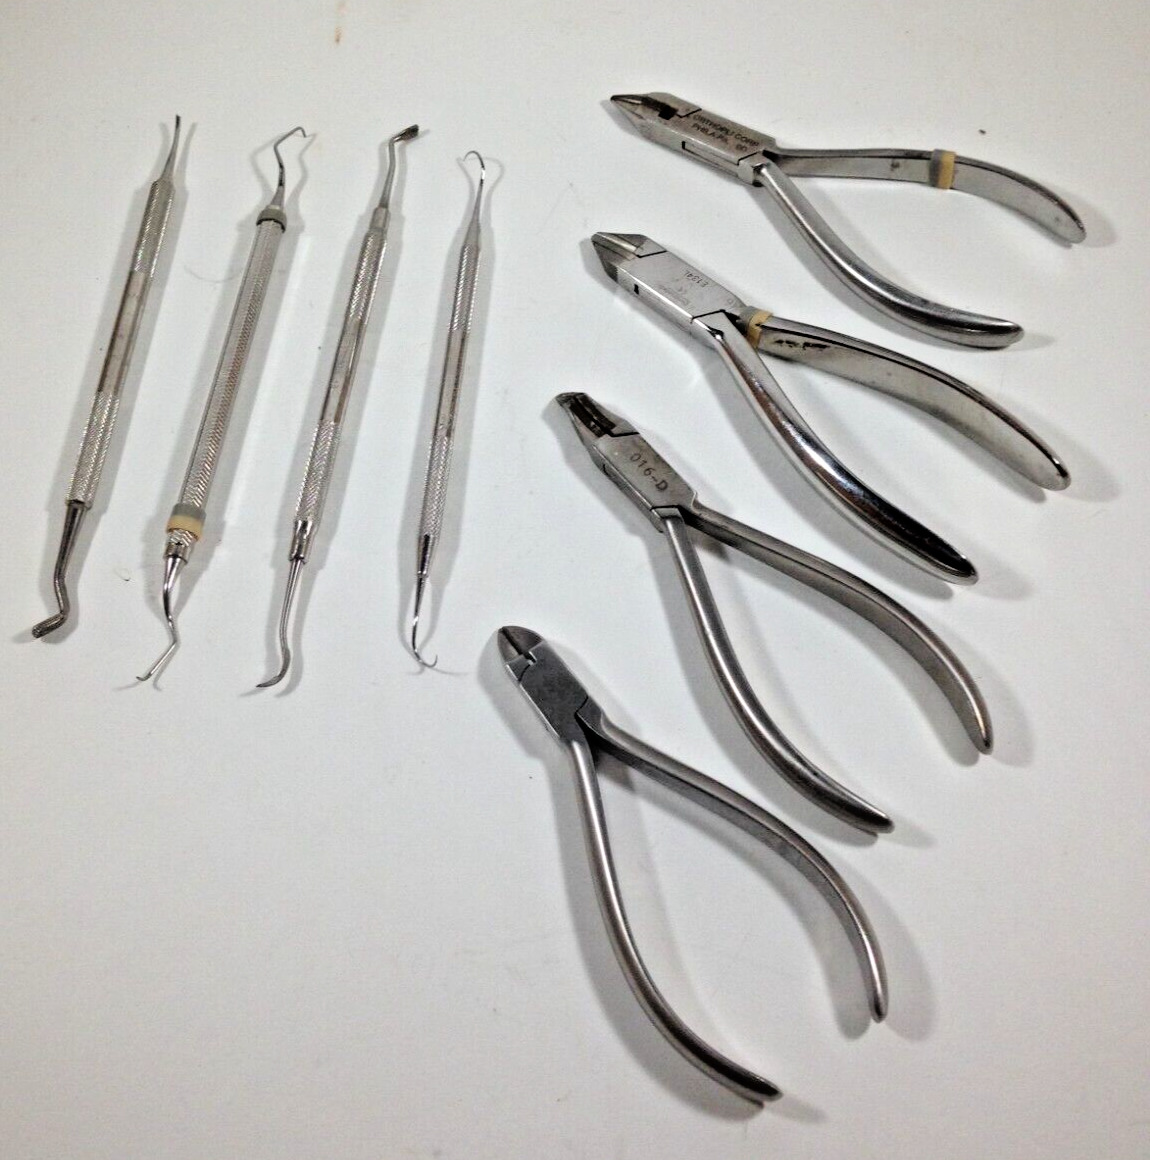 Vintage Dental Hygiene Dentist Tools Pliers Picks Lot of 8